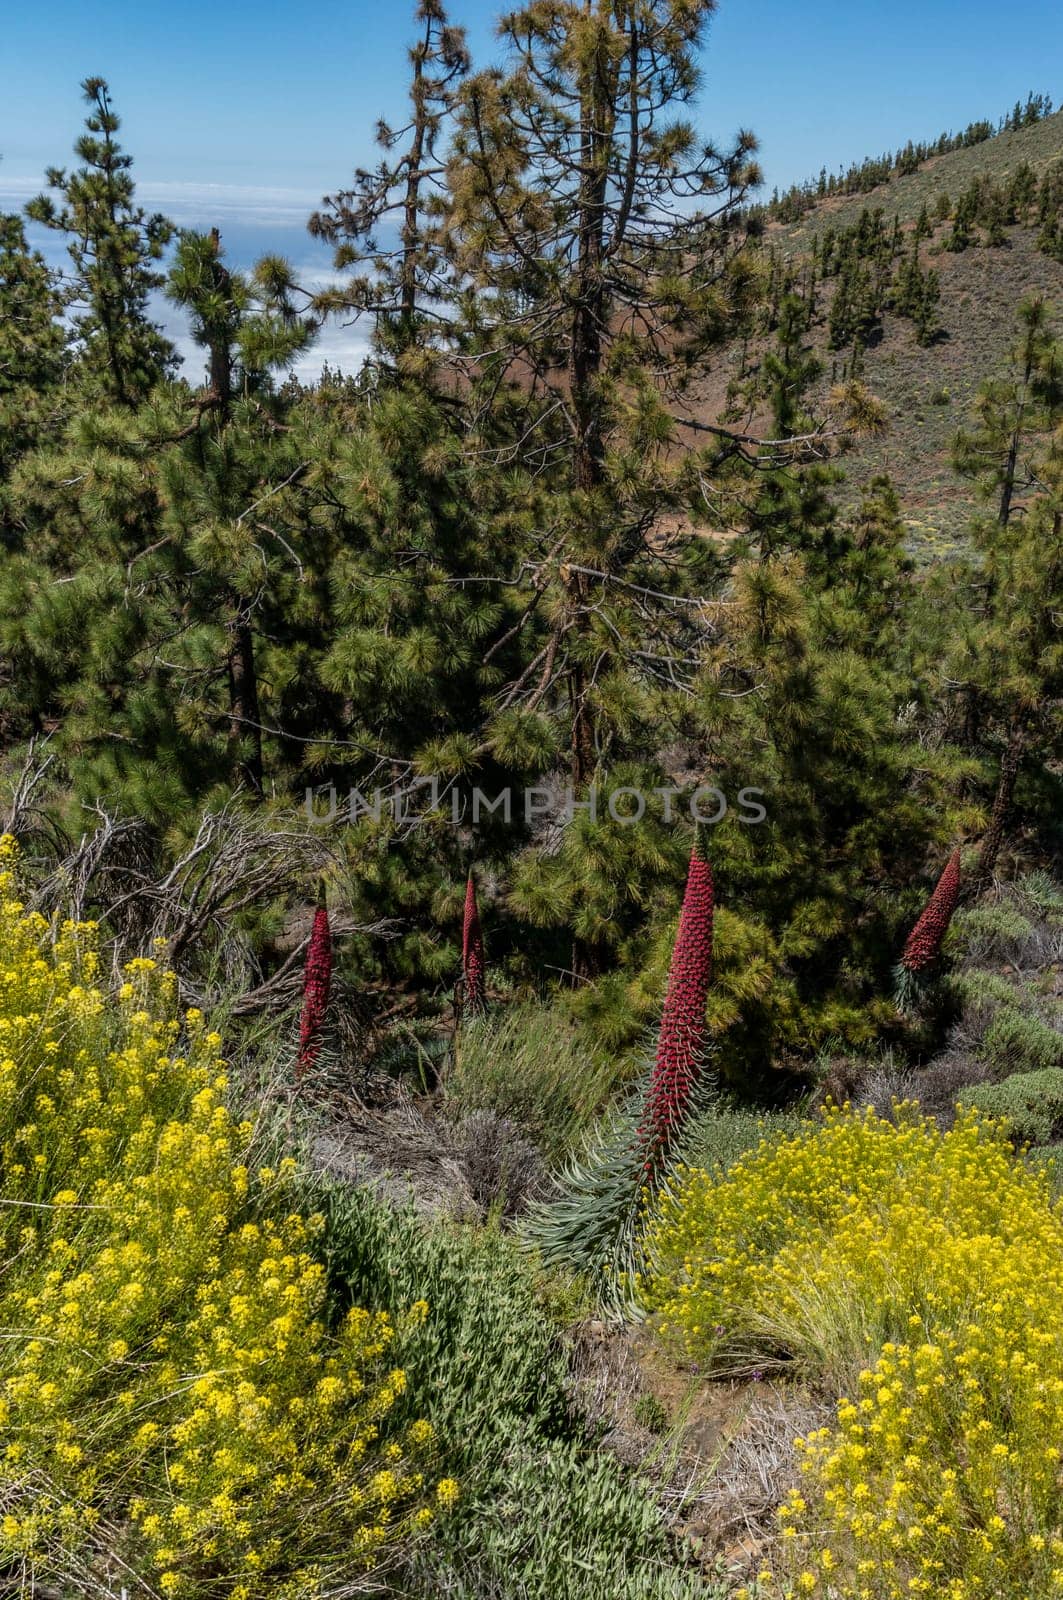 Red Flower of tajinaste rojo among Canary Island pine trees and yellow flowers by amovitania